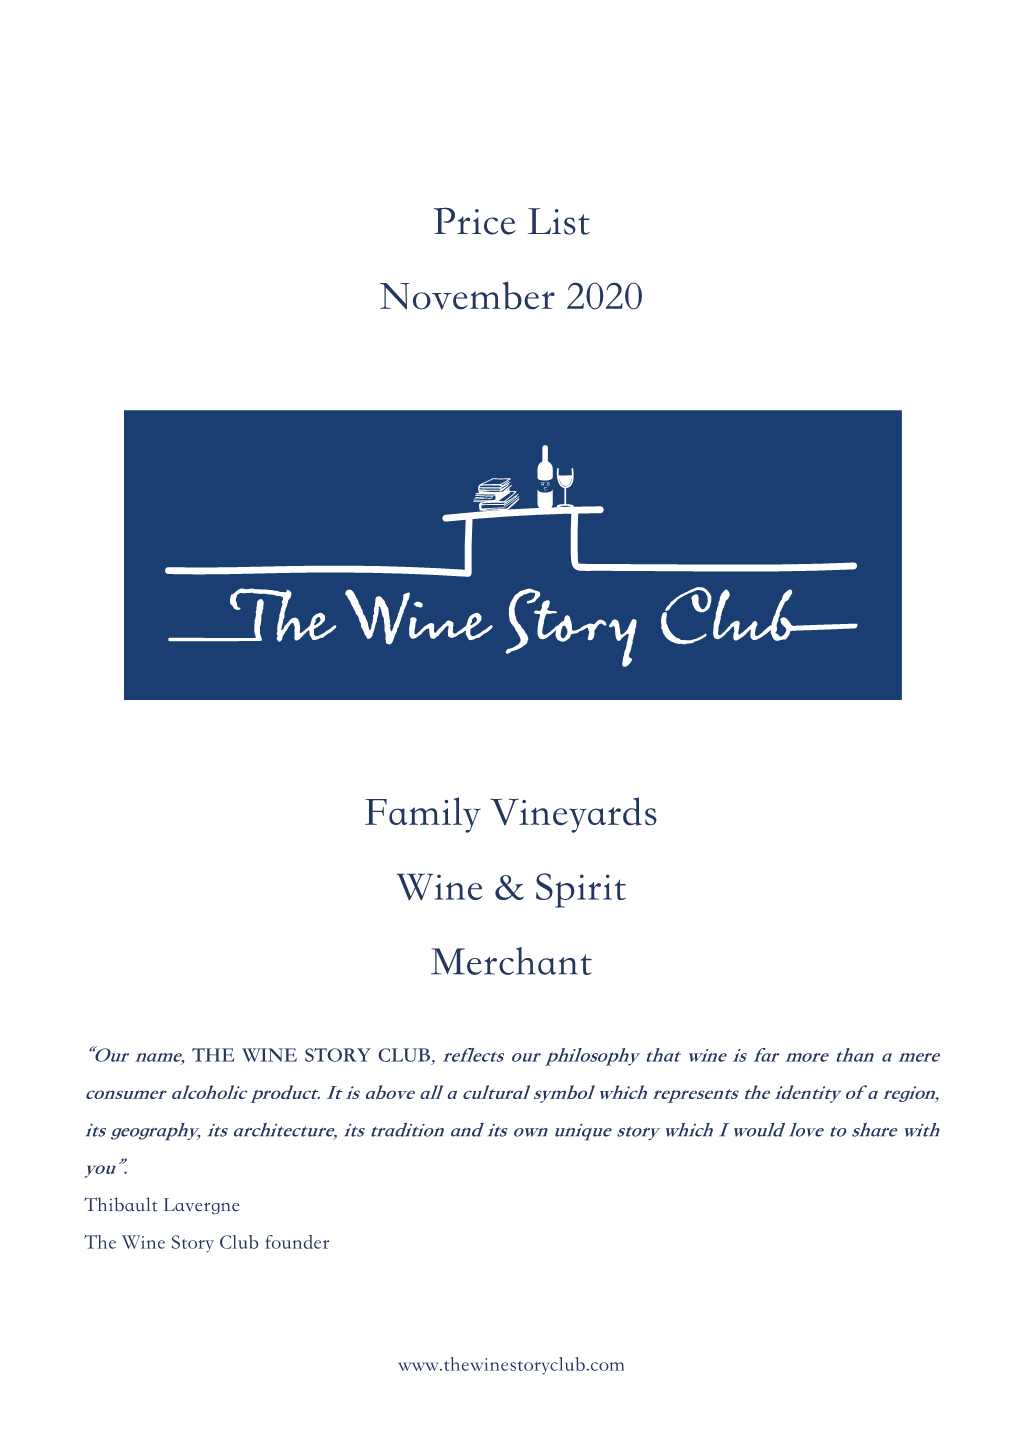 Price List November 2020 Family Vineyards Wine & Spirit Merchant